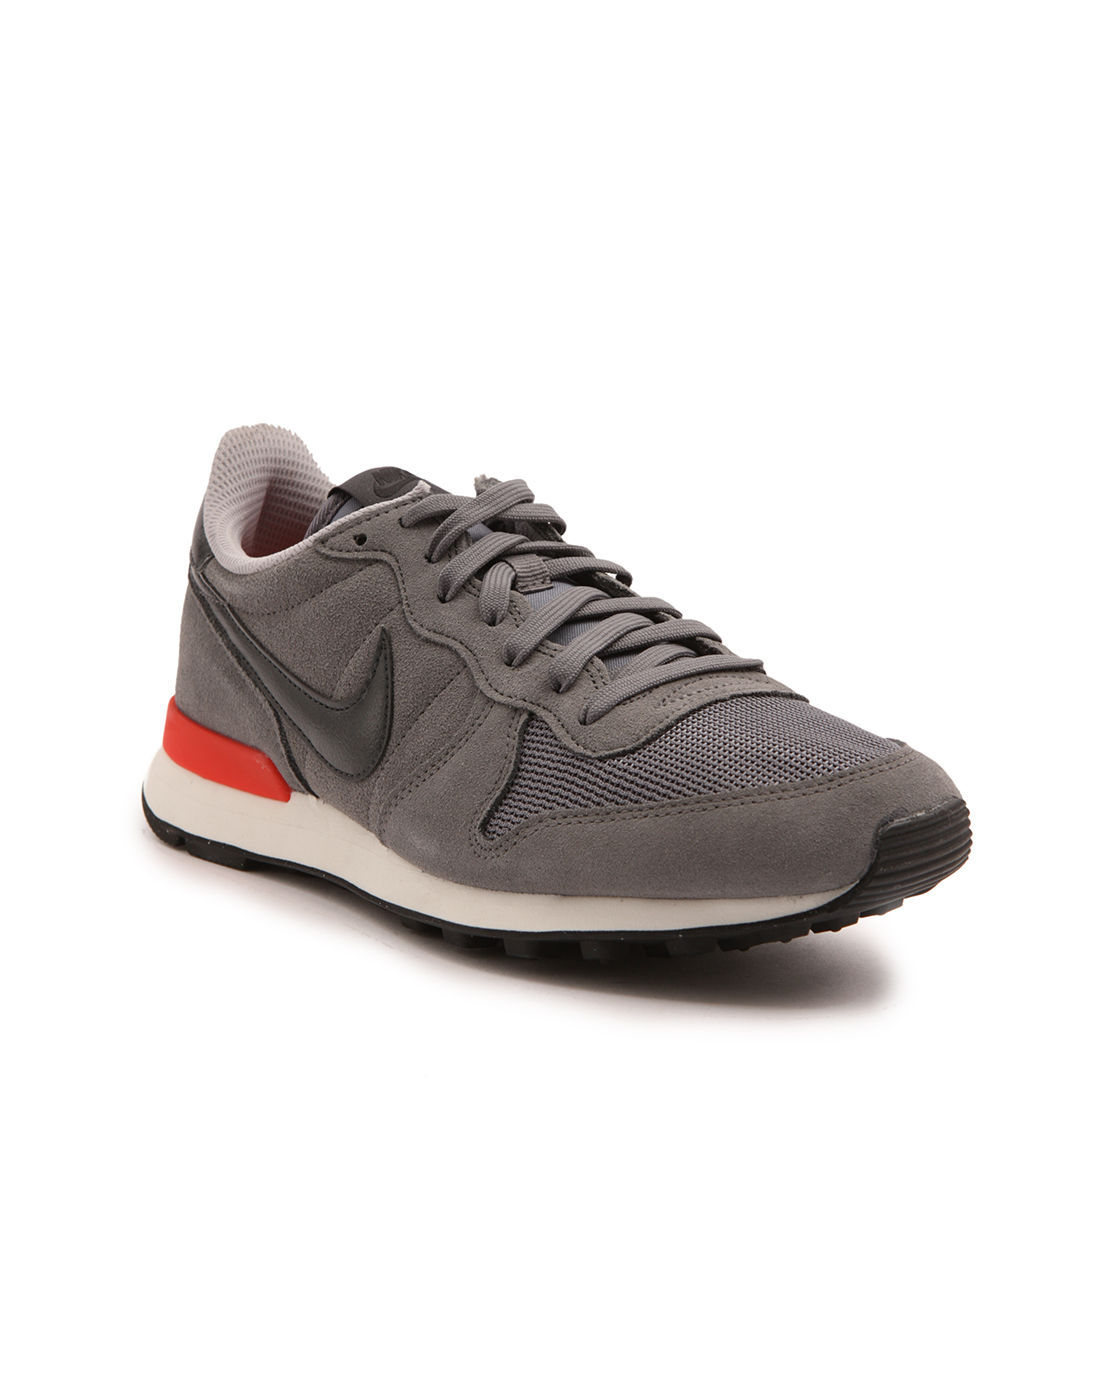 Nike Internationalist Grey Suede Sneakers in Gray for Men